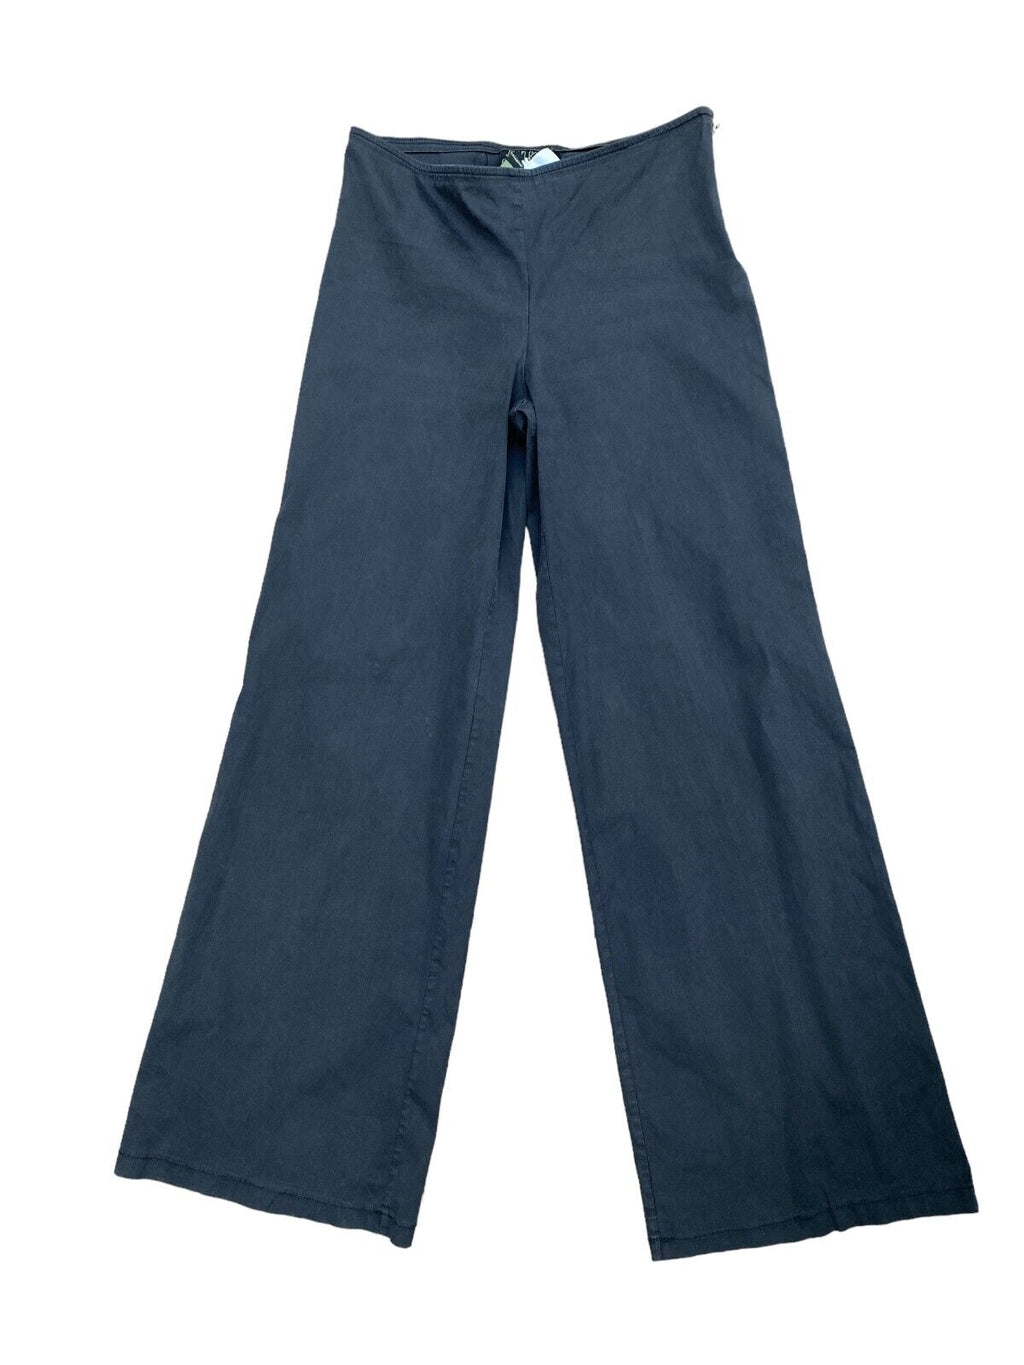 Vintage Grey Stretch Pants Size IT 40 fits IT 38 EU 34 US 4